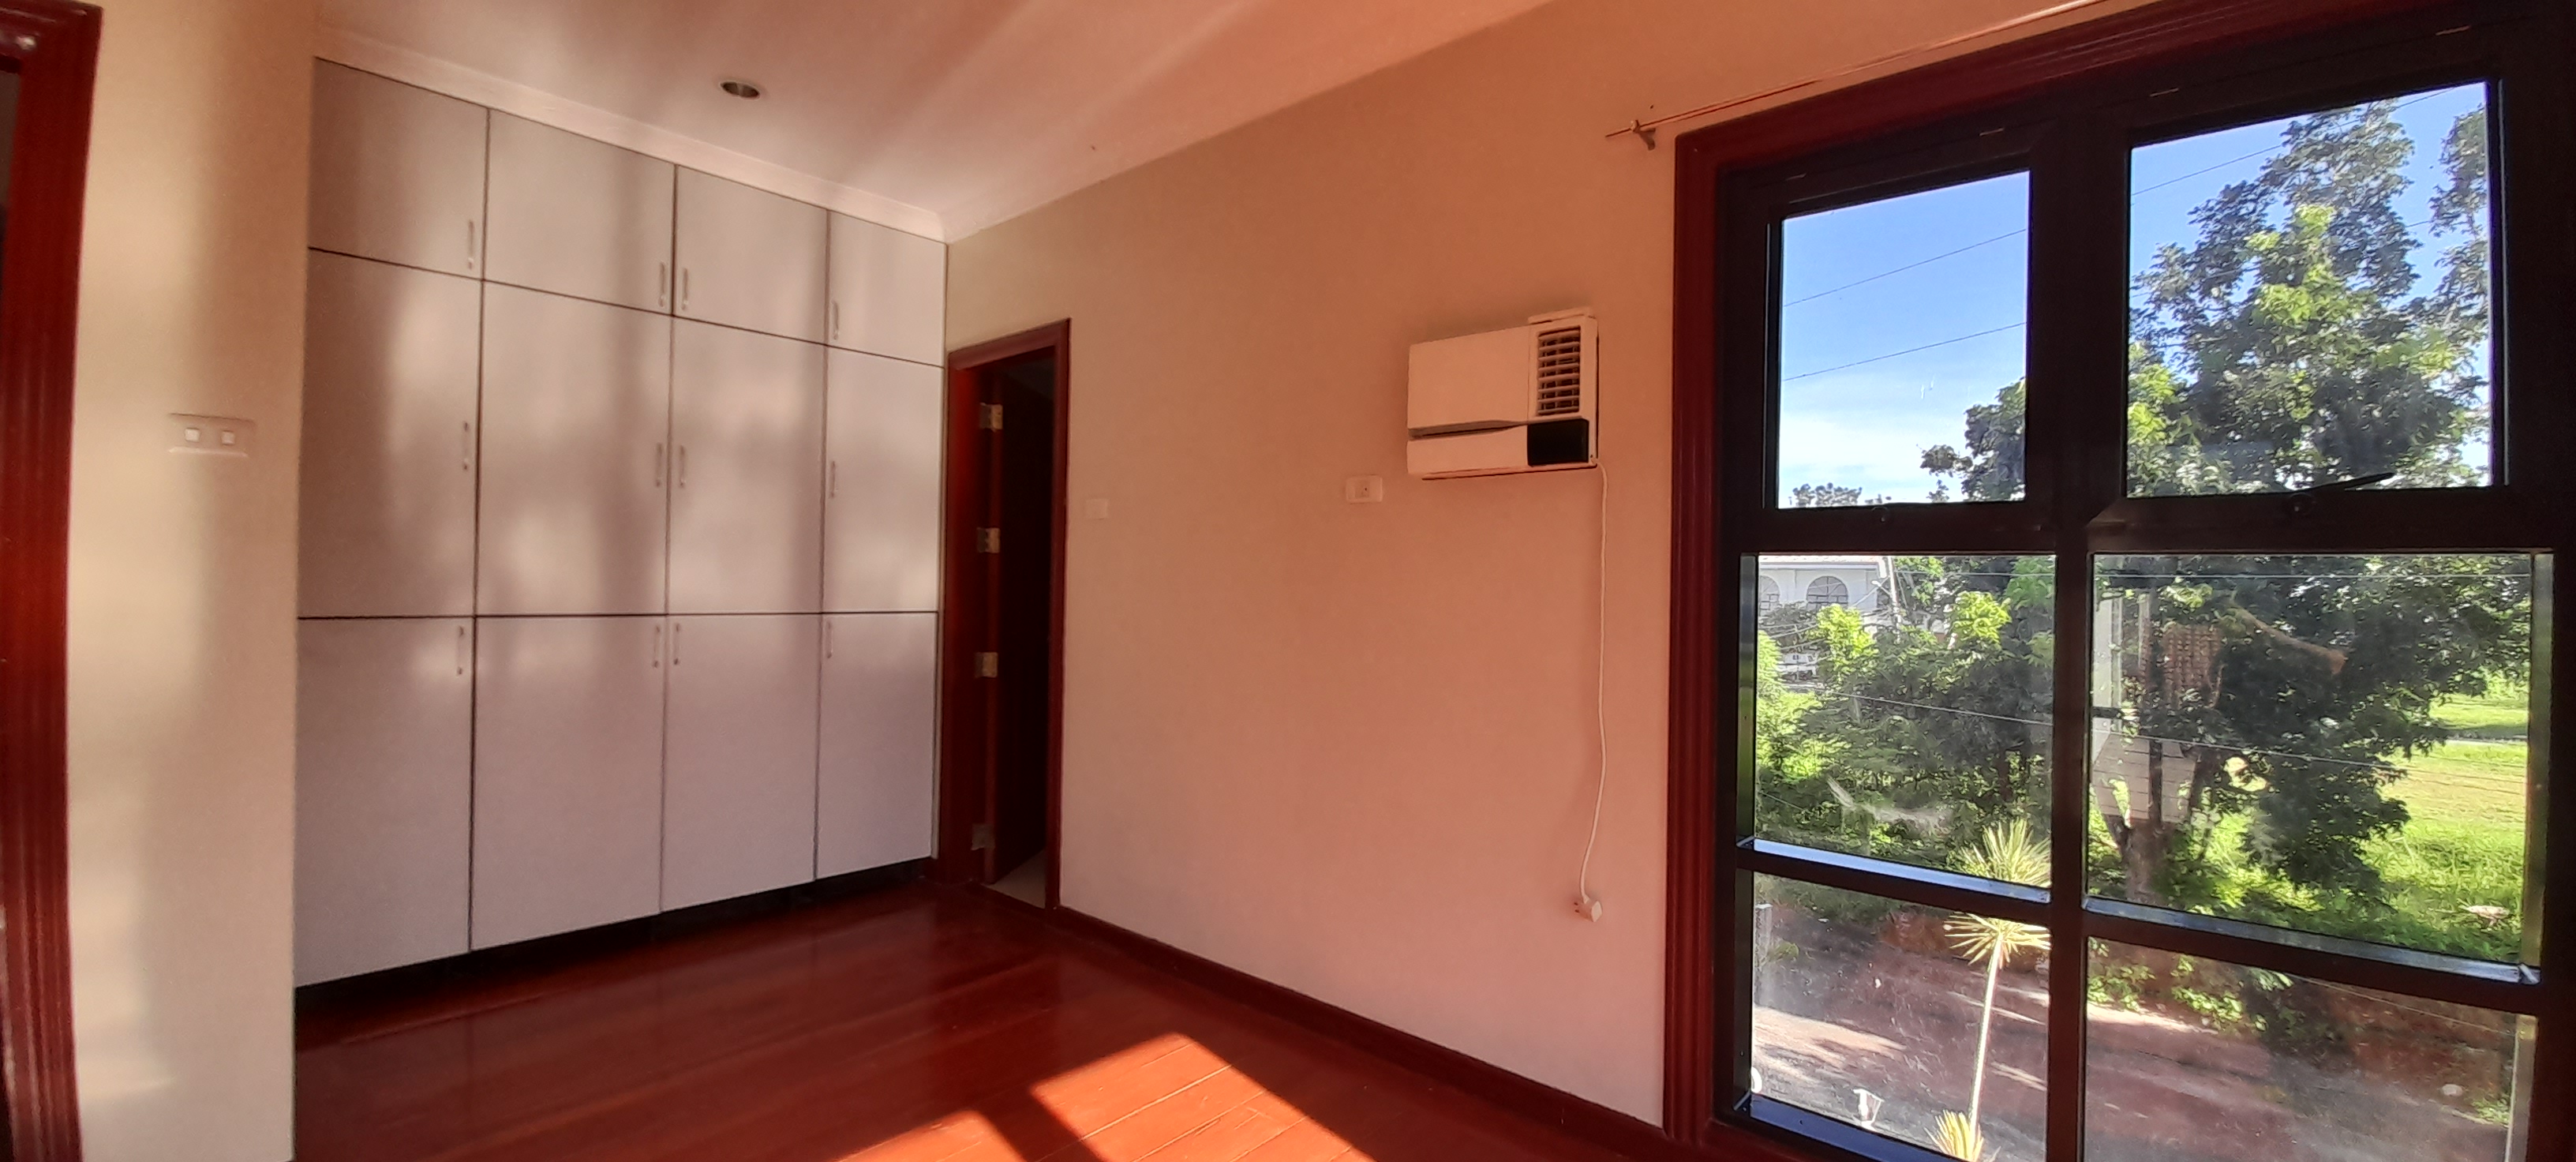 semi-furnished-4-bedroom-house-in-vista-grand-subdivision-talisay-city-cebu